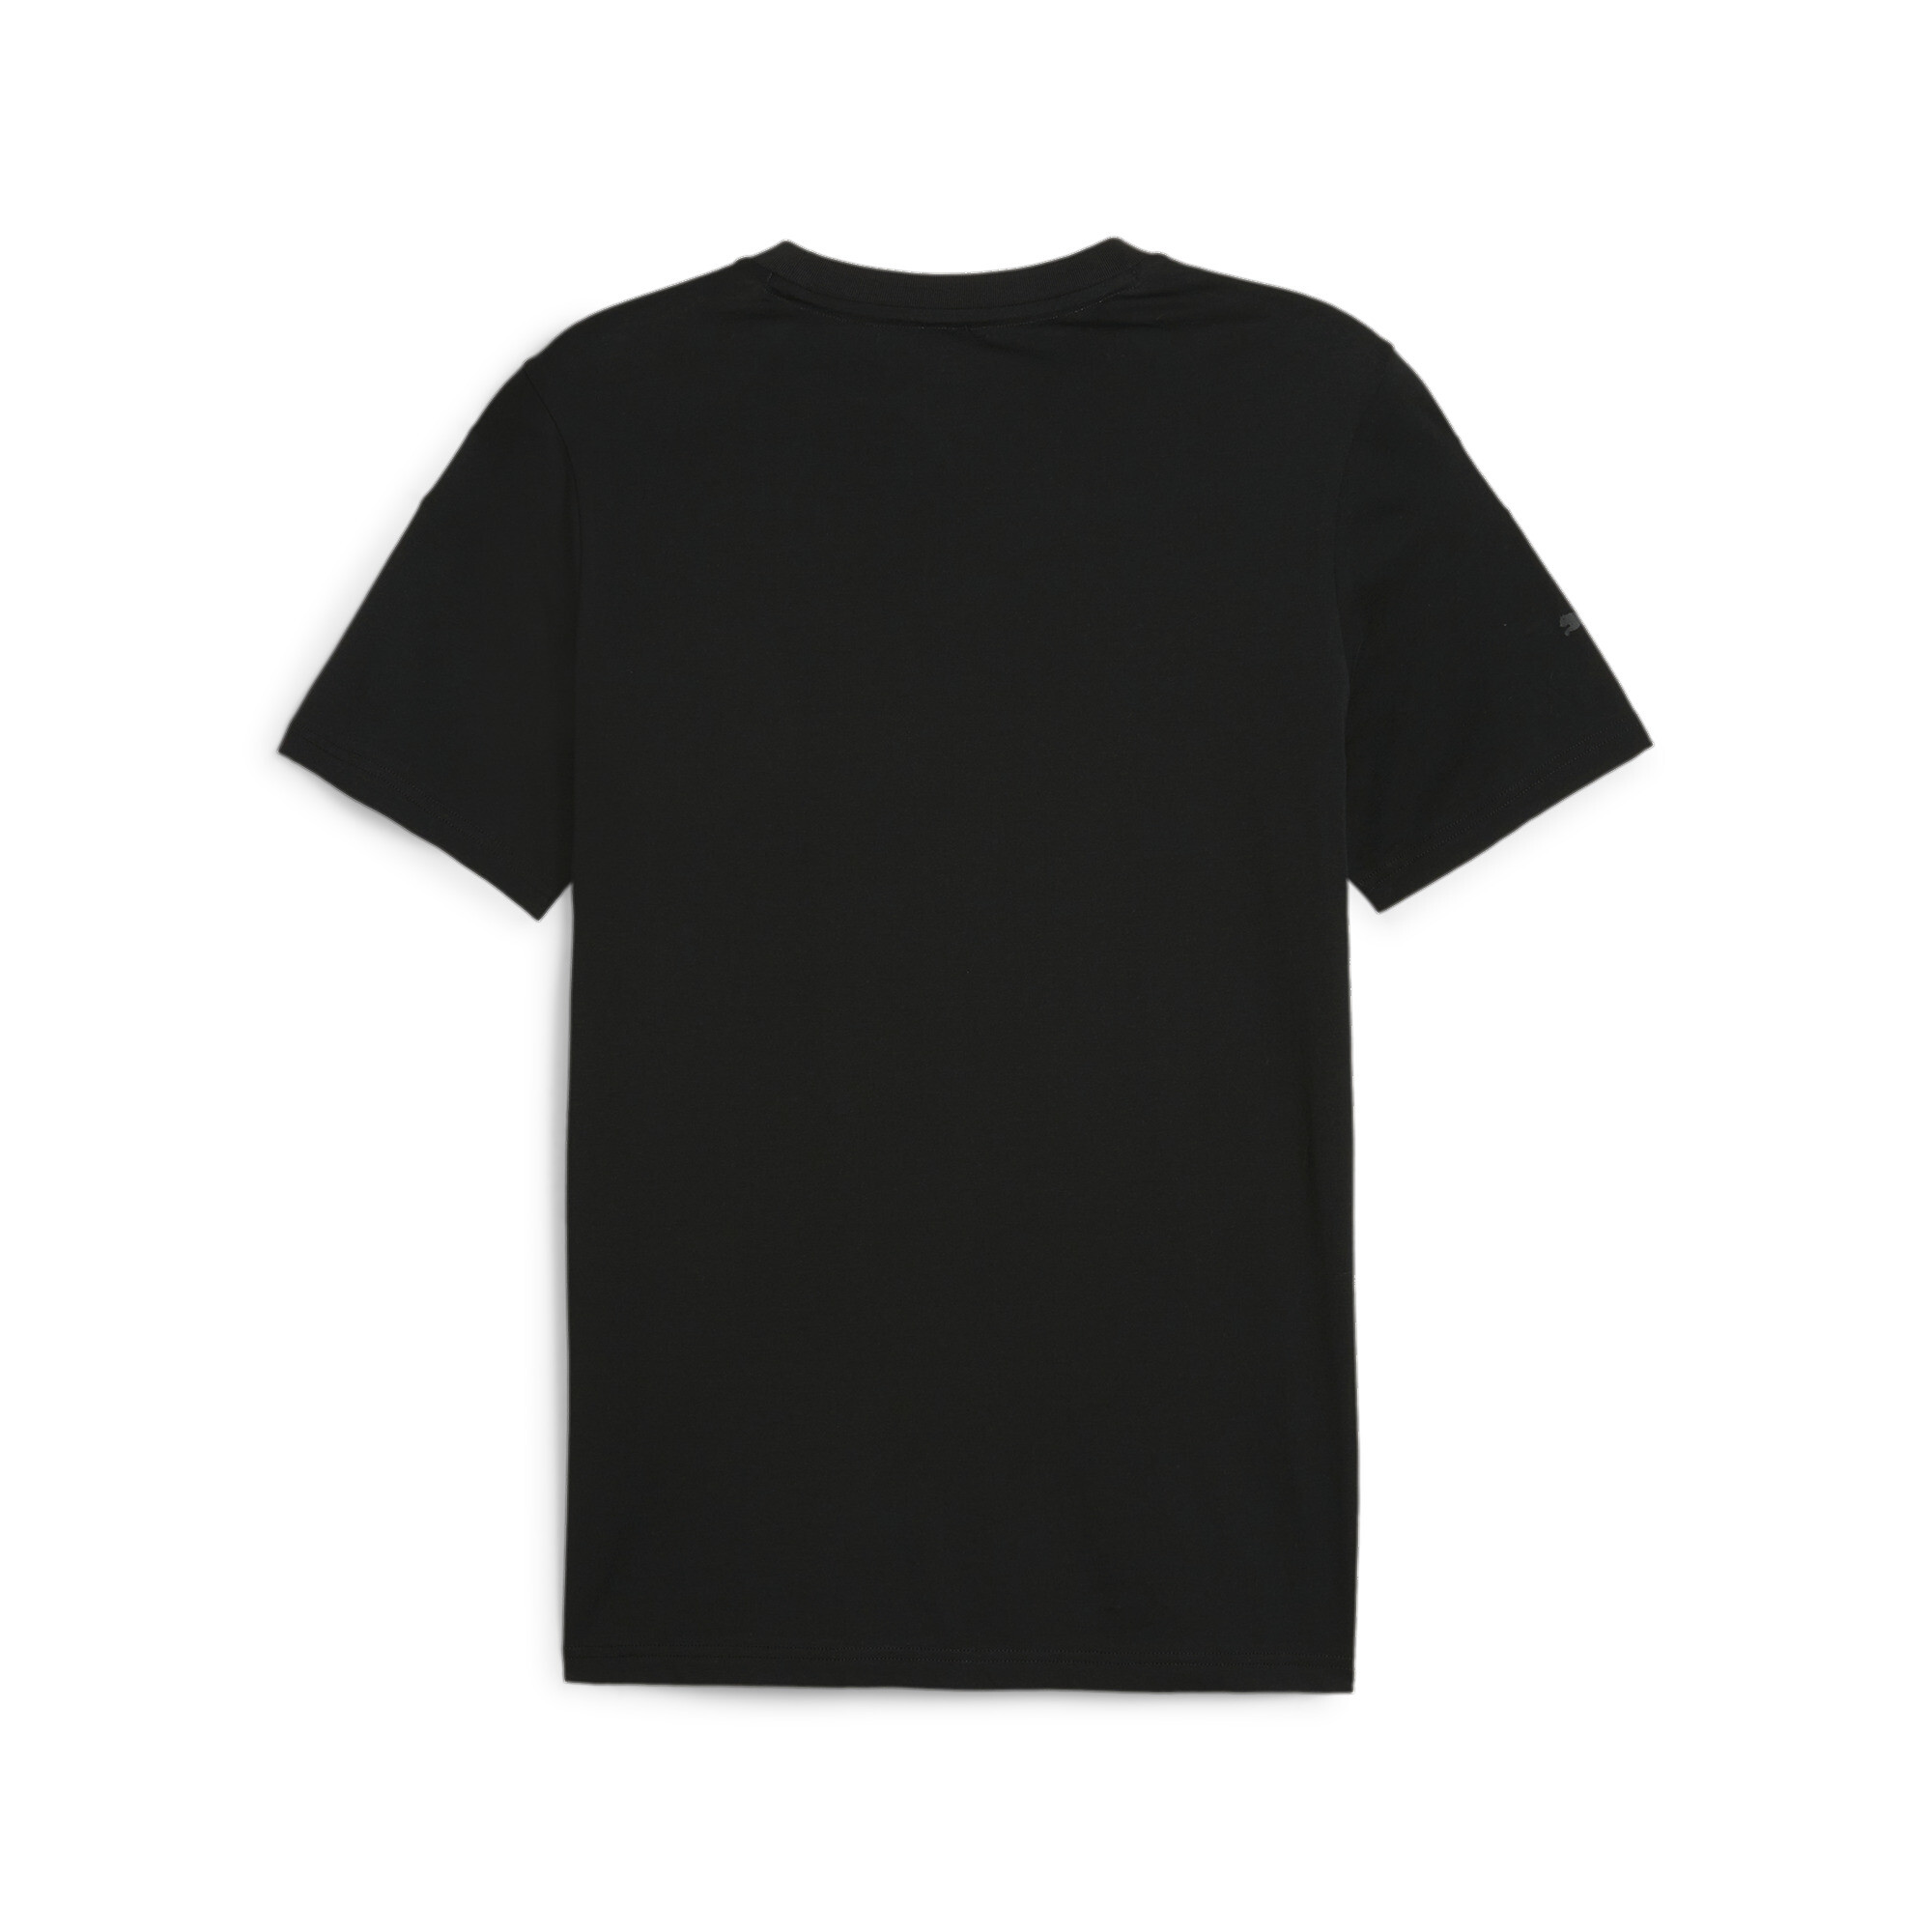 Men's Puma AMG Motorsports T-Shirt, Black, Size XL, Clothing